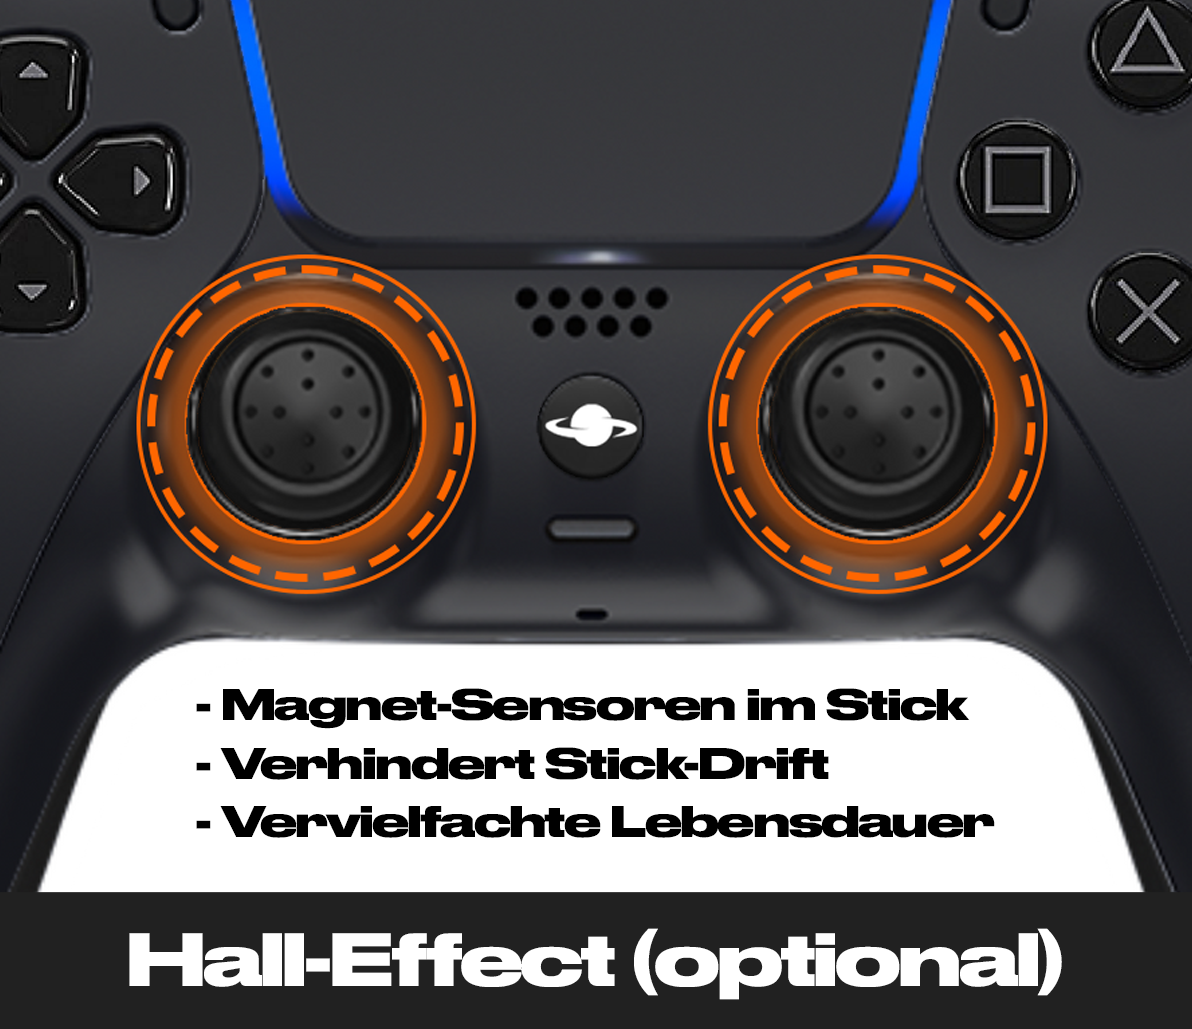 Controlador personalizado de PS5 'Surreal Lava'